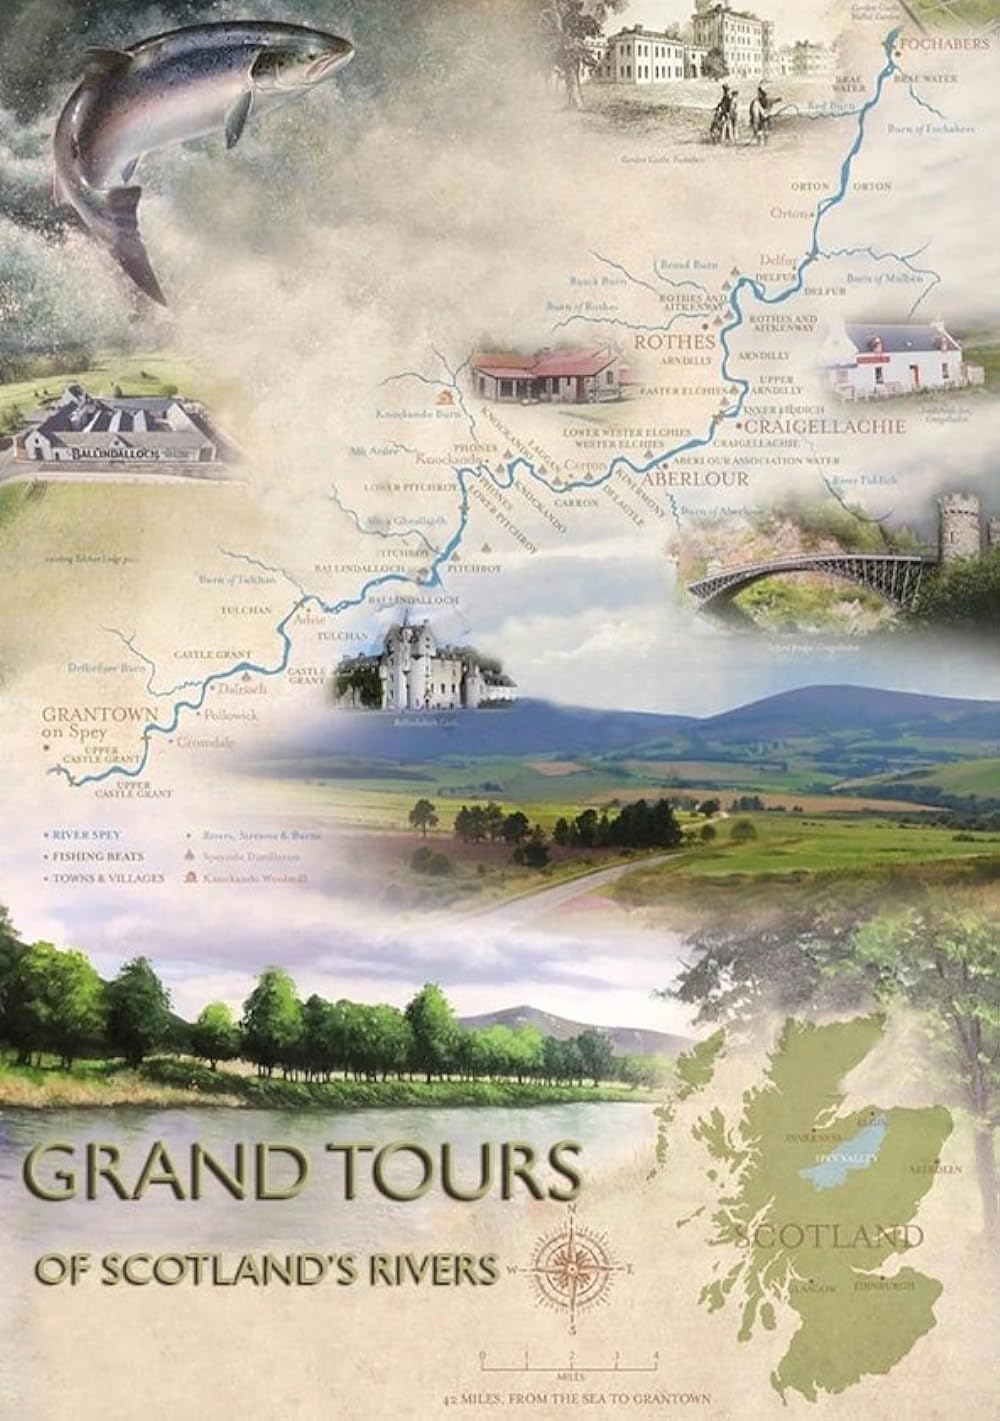 Grand Tours of Scotland's Rivers